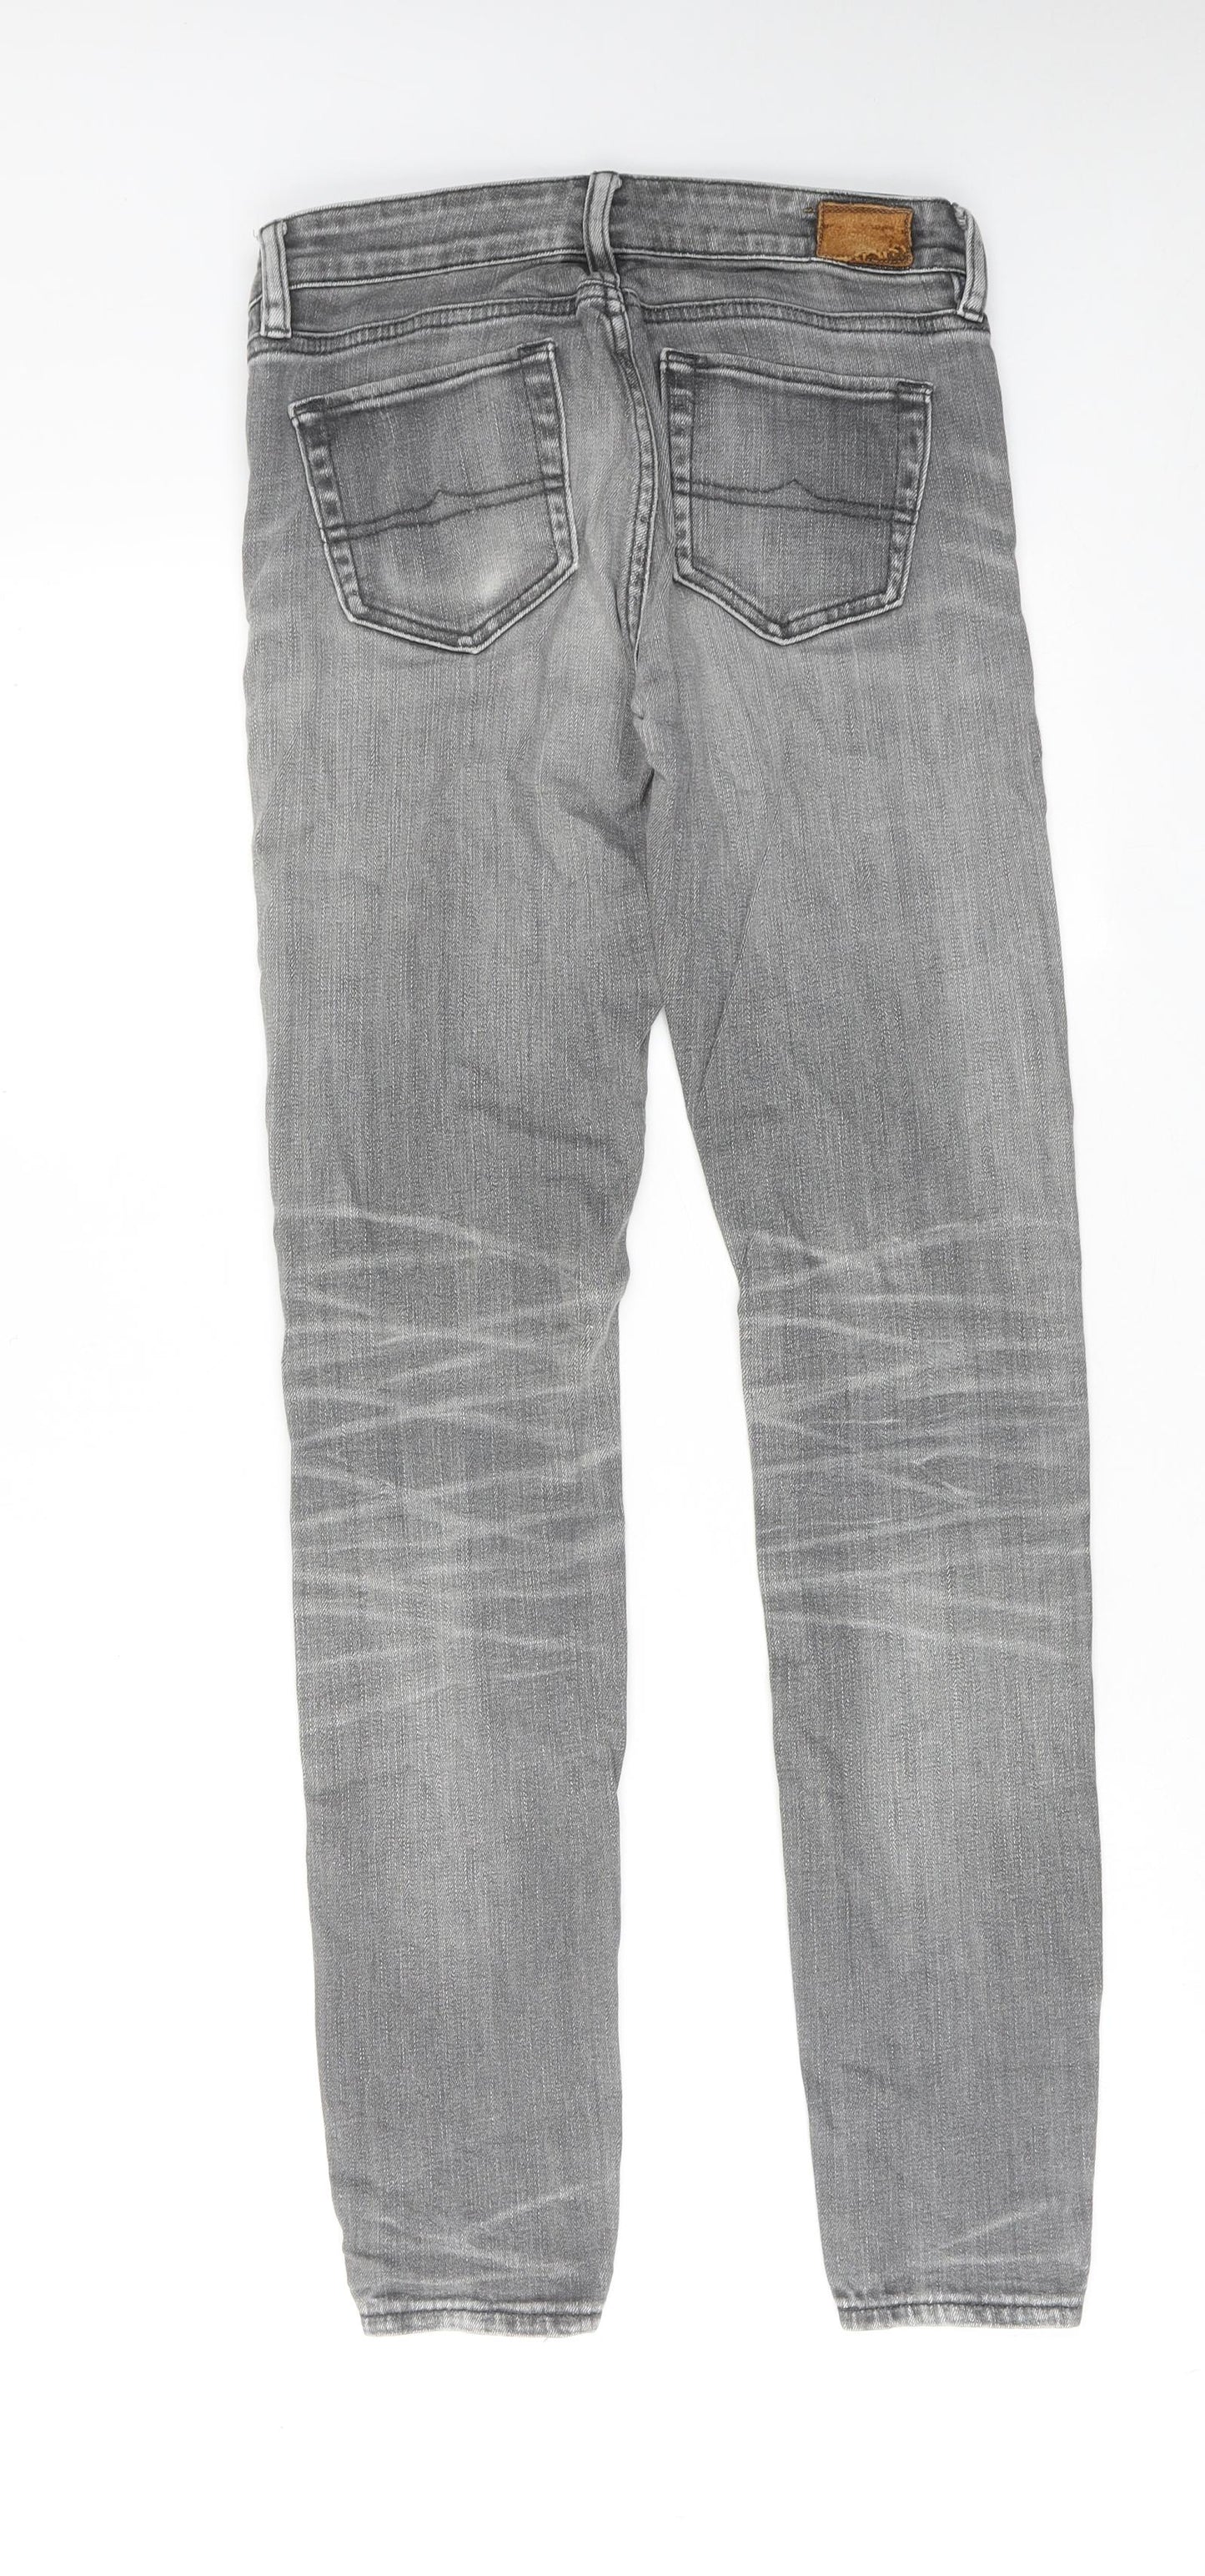 Denim & Supply Womens Grey Cotton Skinny Jeans Size 26 in L32 in Regular Zip